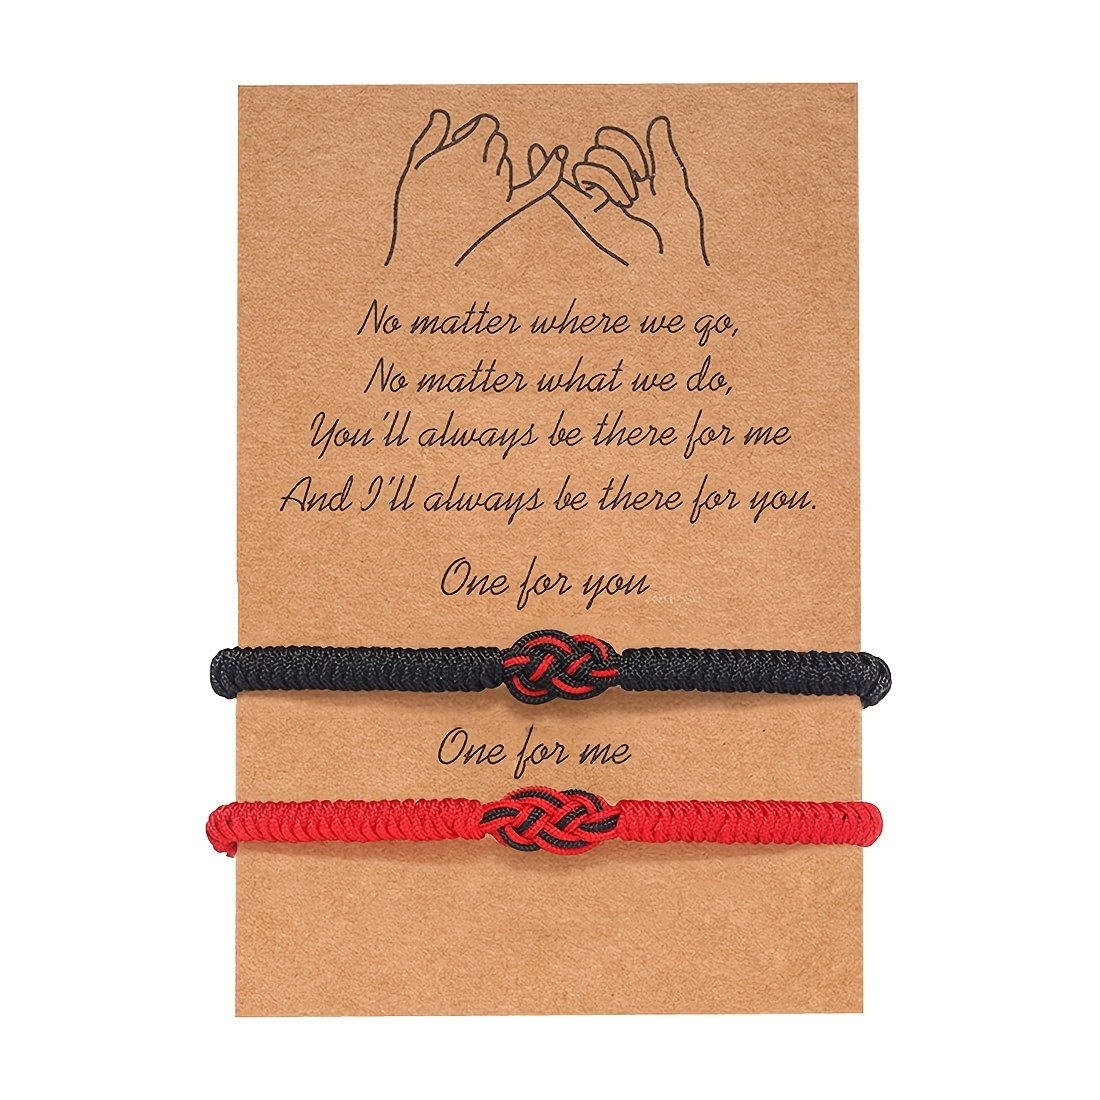 

2 Pcs Matching Couples Bracelets Relationship Bracelets, Red Rope Bracelet Gifts For Lovers Friendship, Size Adjustable, Red Black String Valentine's Day Gift